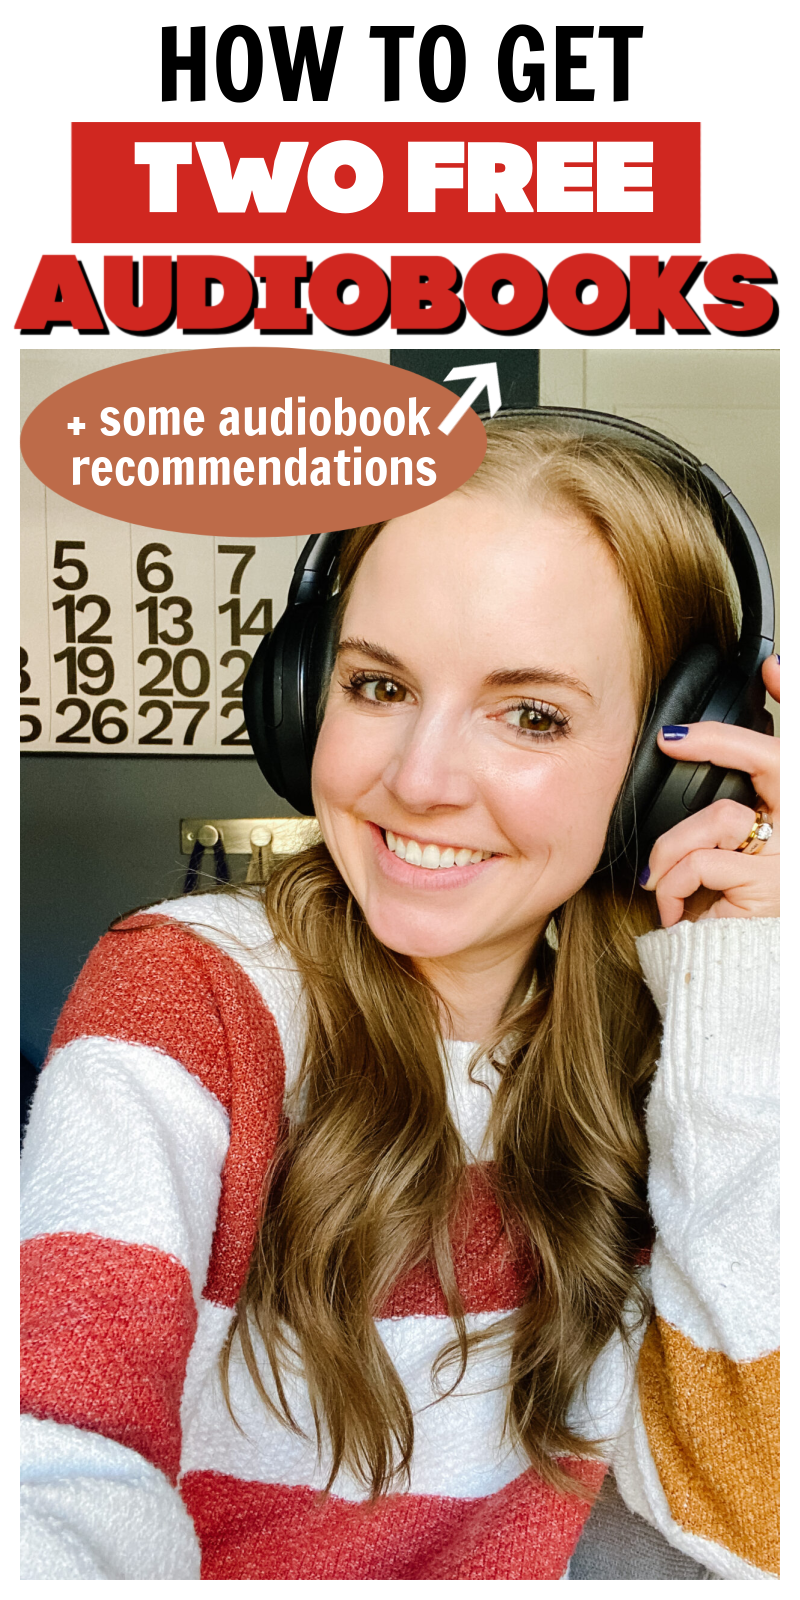 Free audiobooks